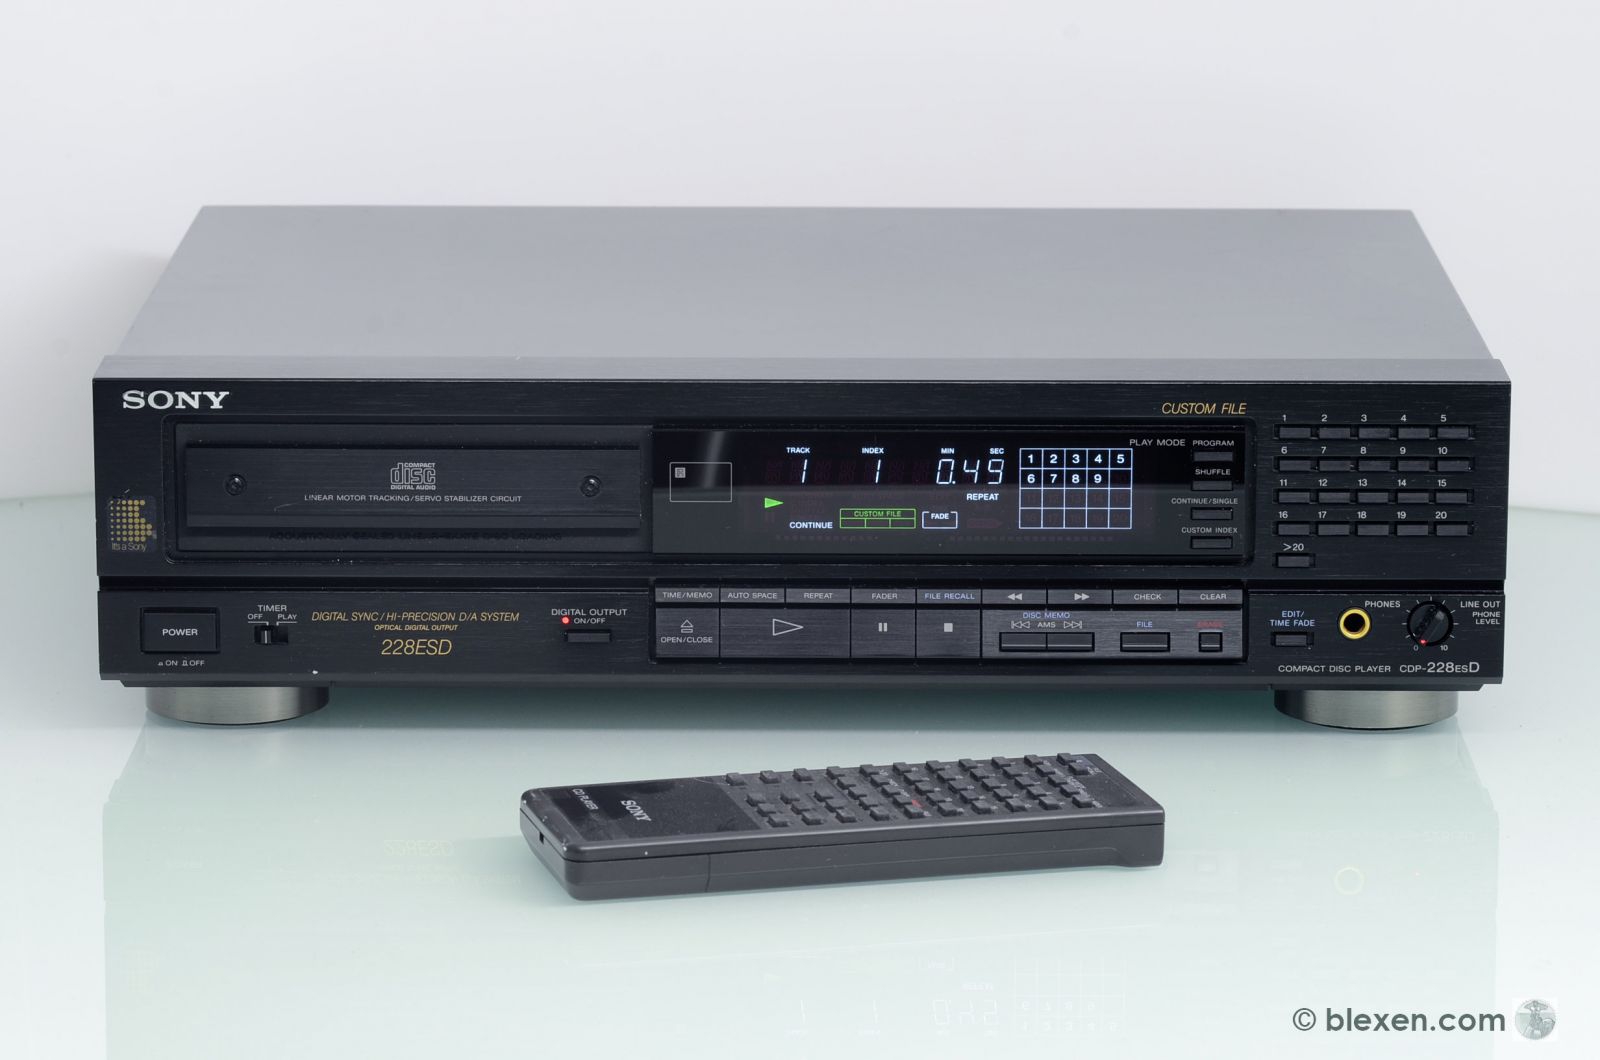 Sony CDP-228ESD CD-Player, 1 year warranty